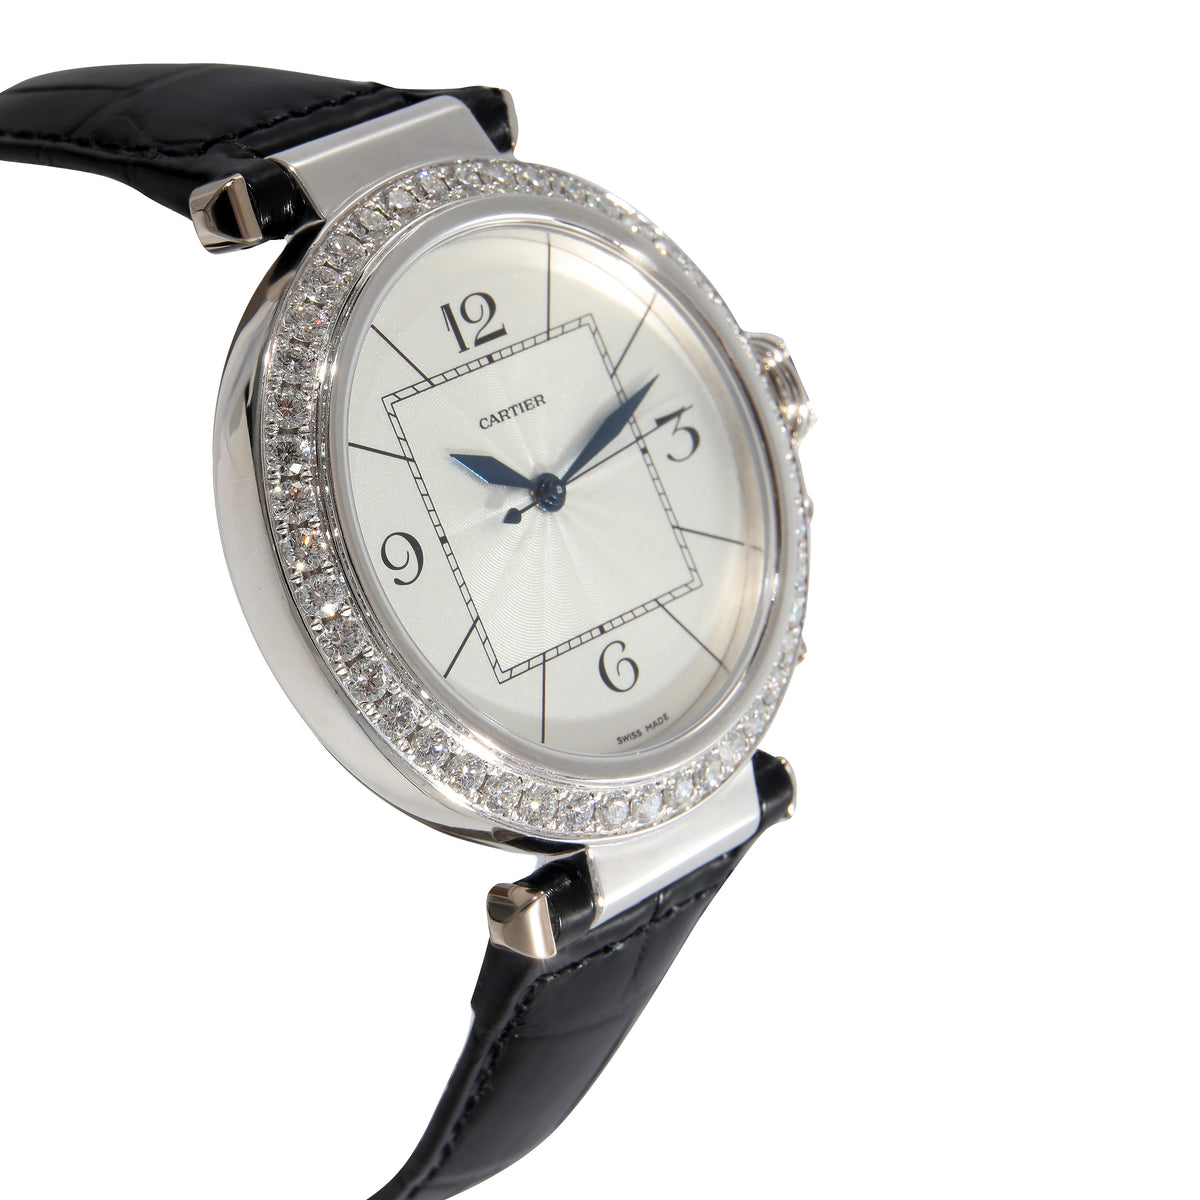 Pasha de Cartier WJ120251 Men's Watch in 18kt White Gold